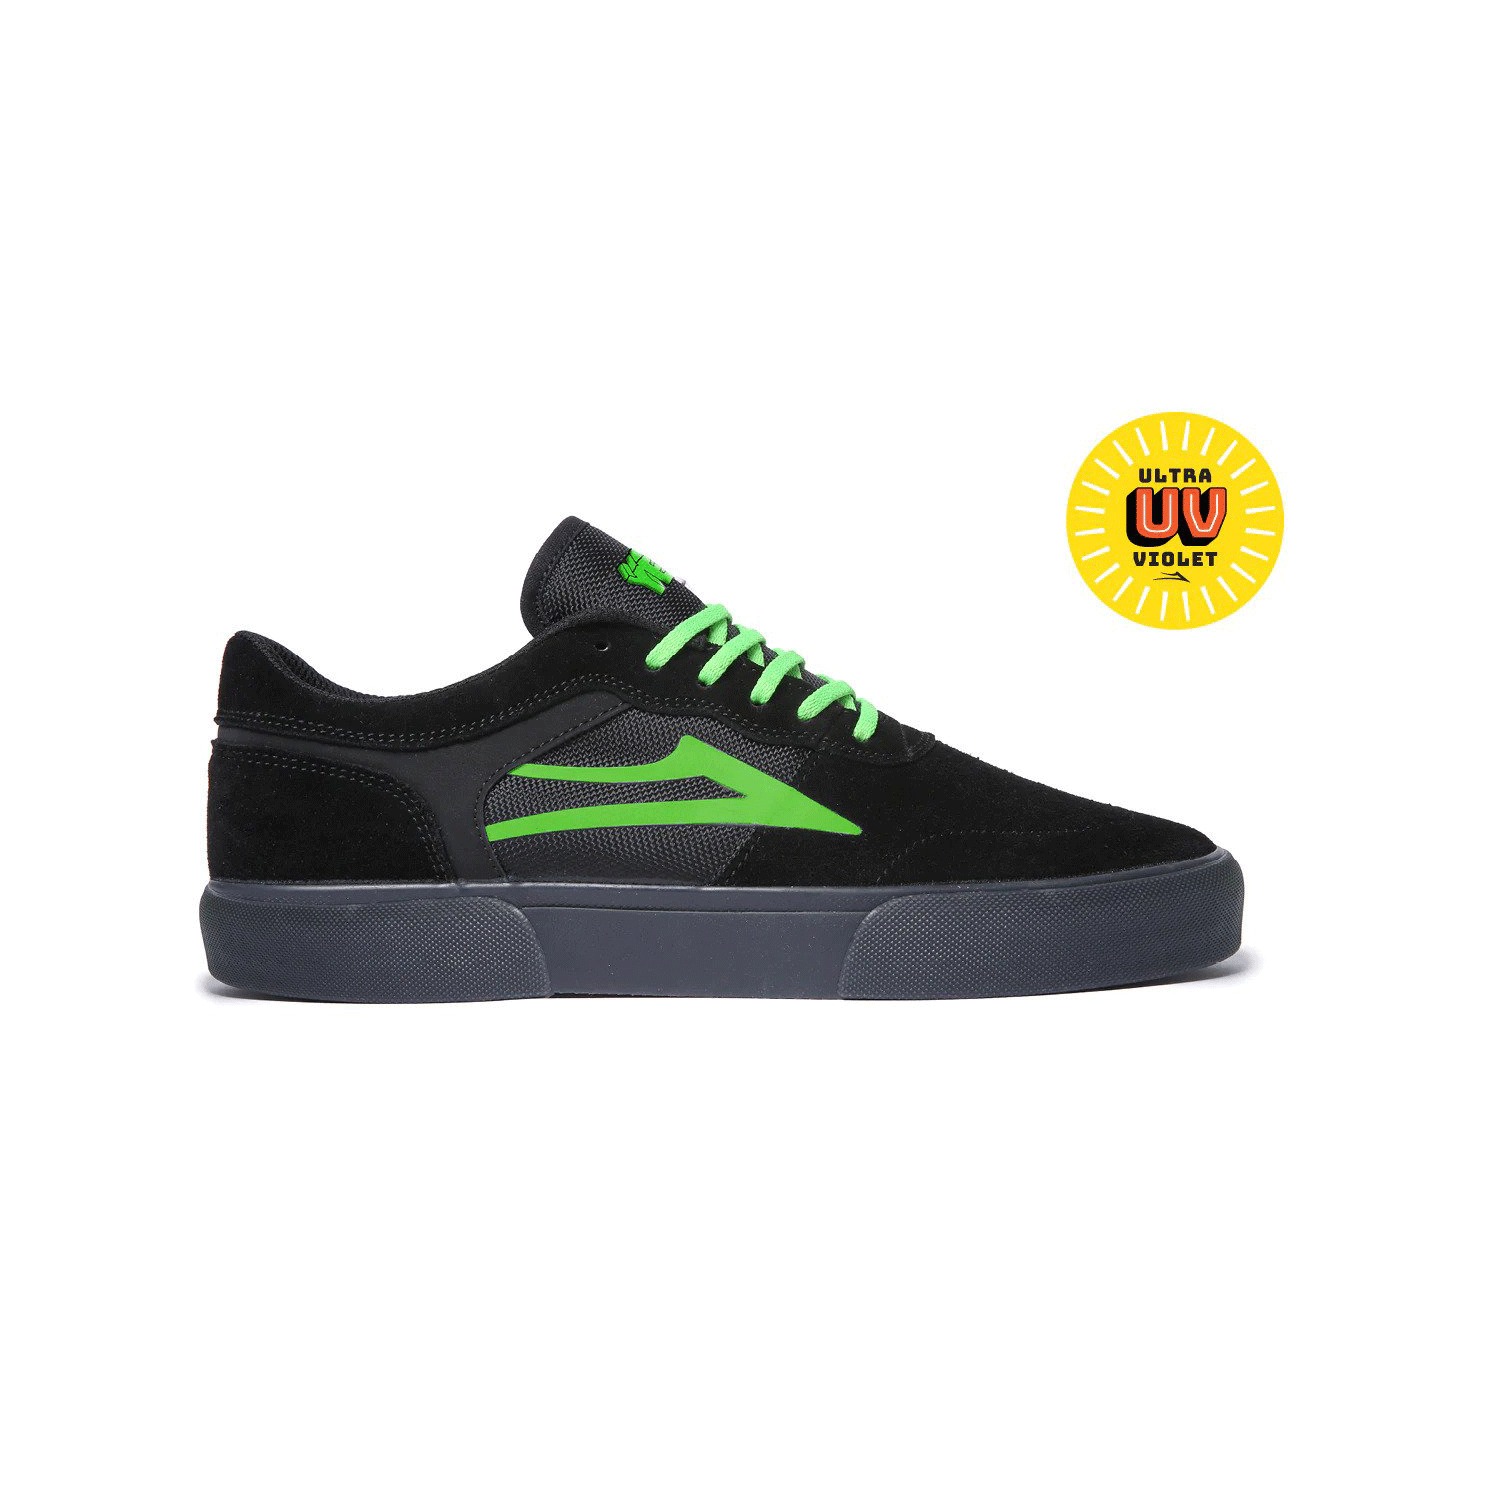 Lakai - Yeah Right Staple Shoes - Black/UV Green SALE